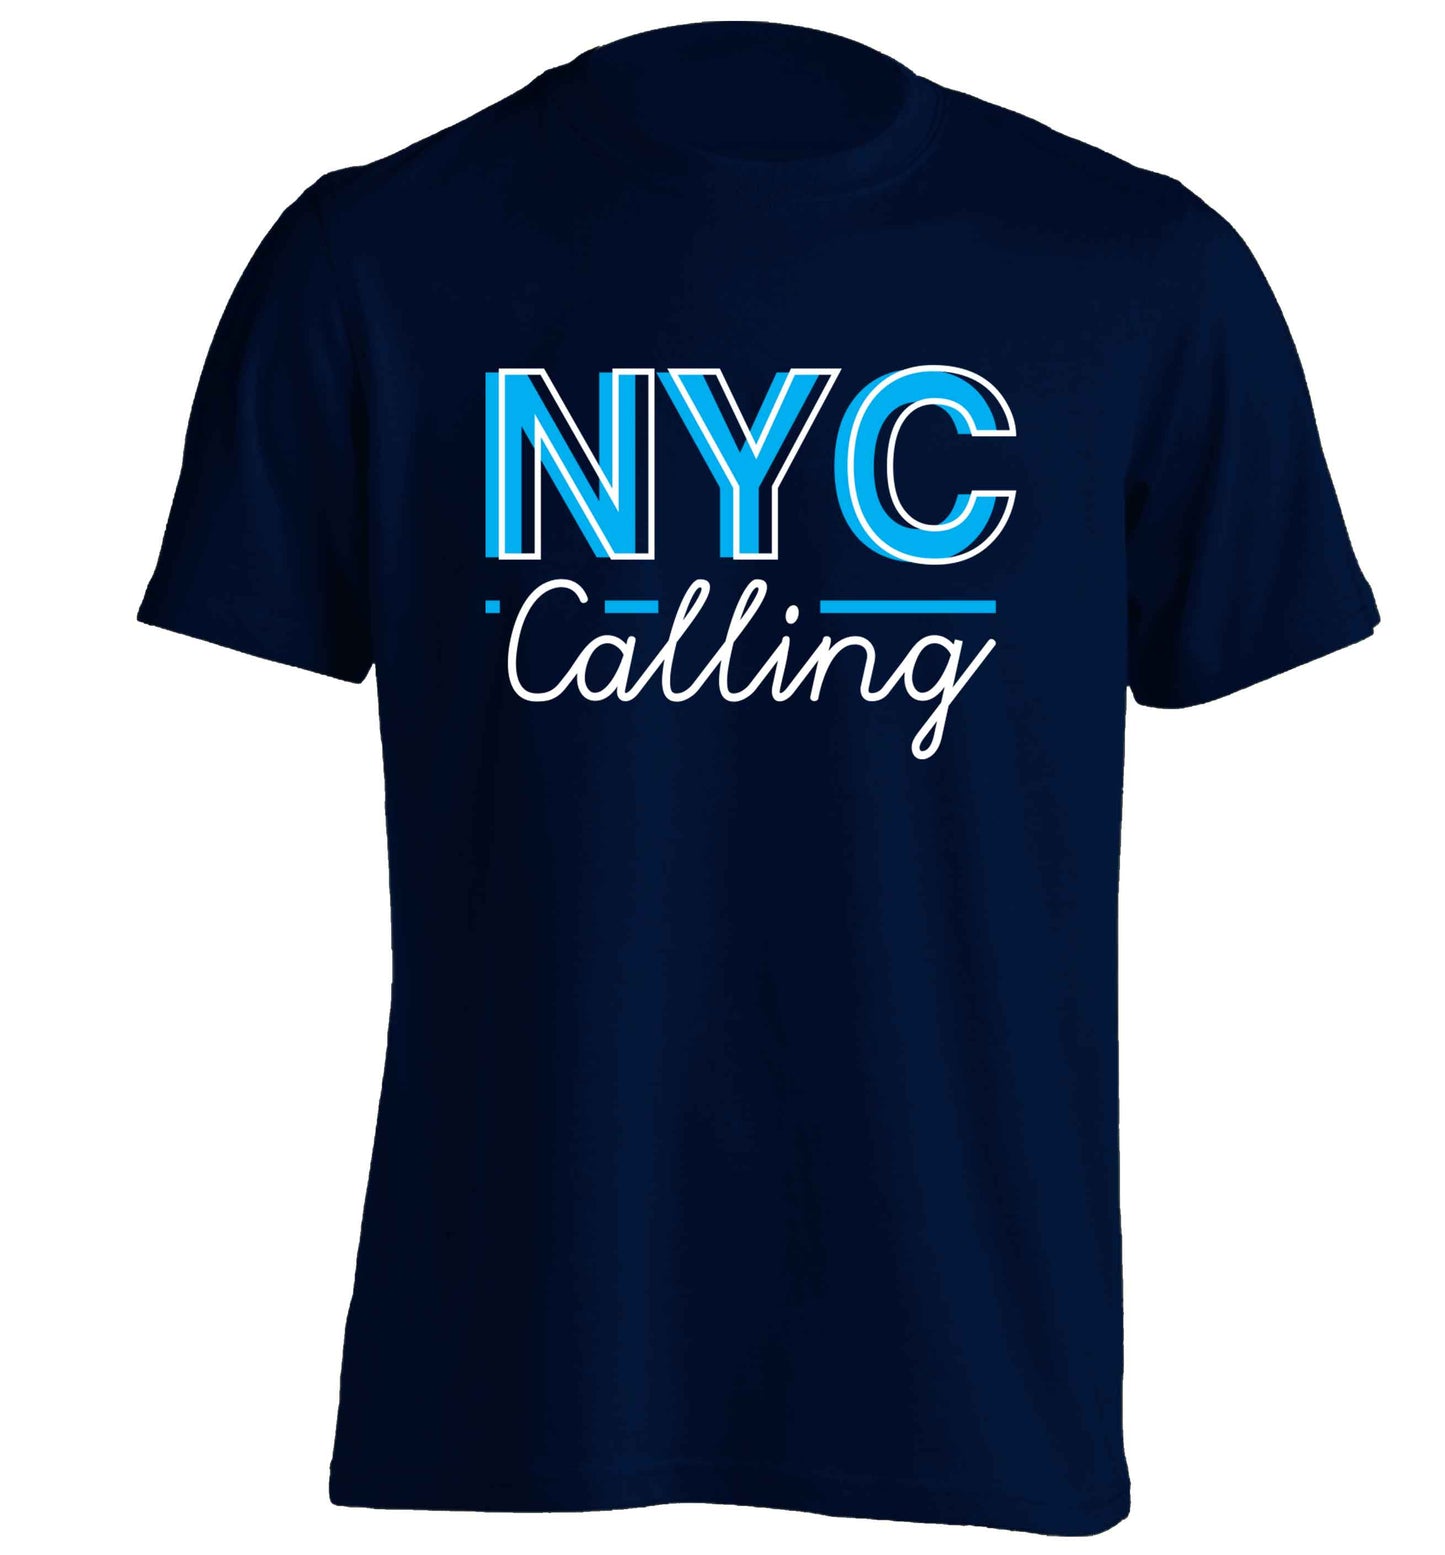 NYC calling adults unisex navy Tshirt 2XL